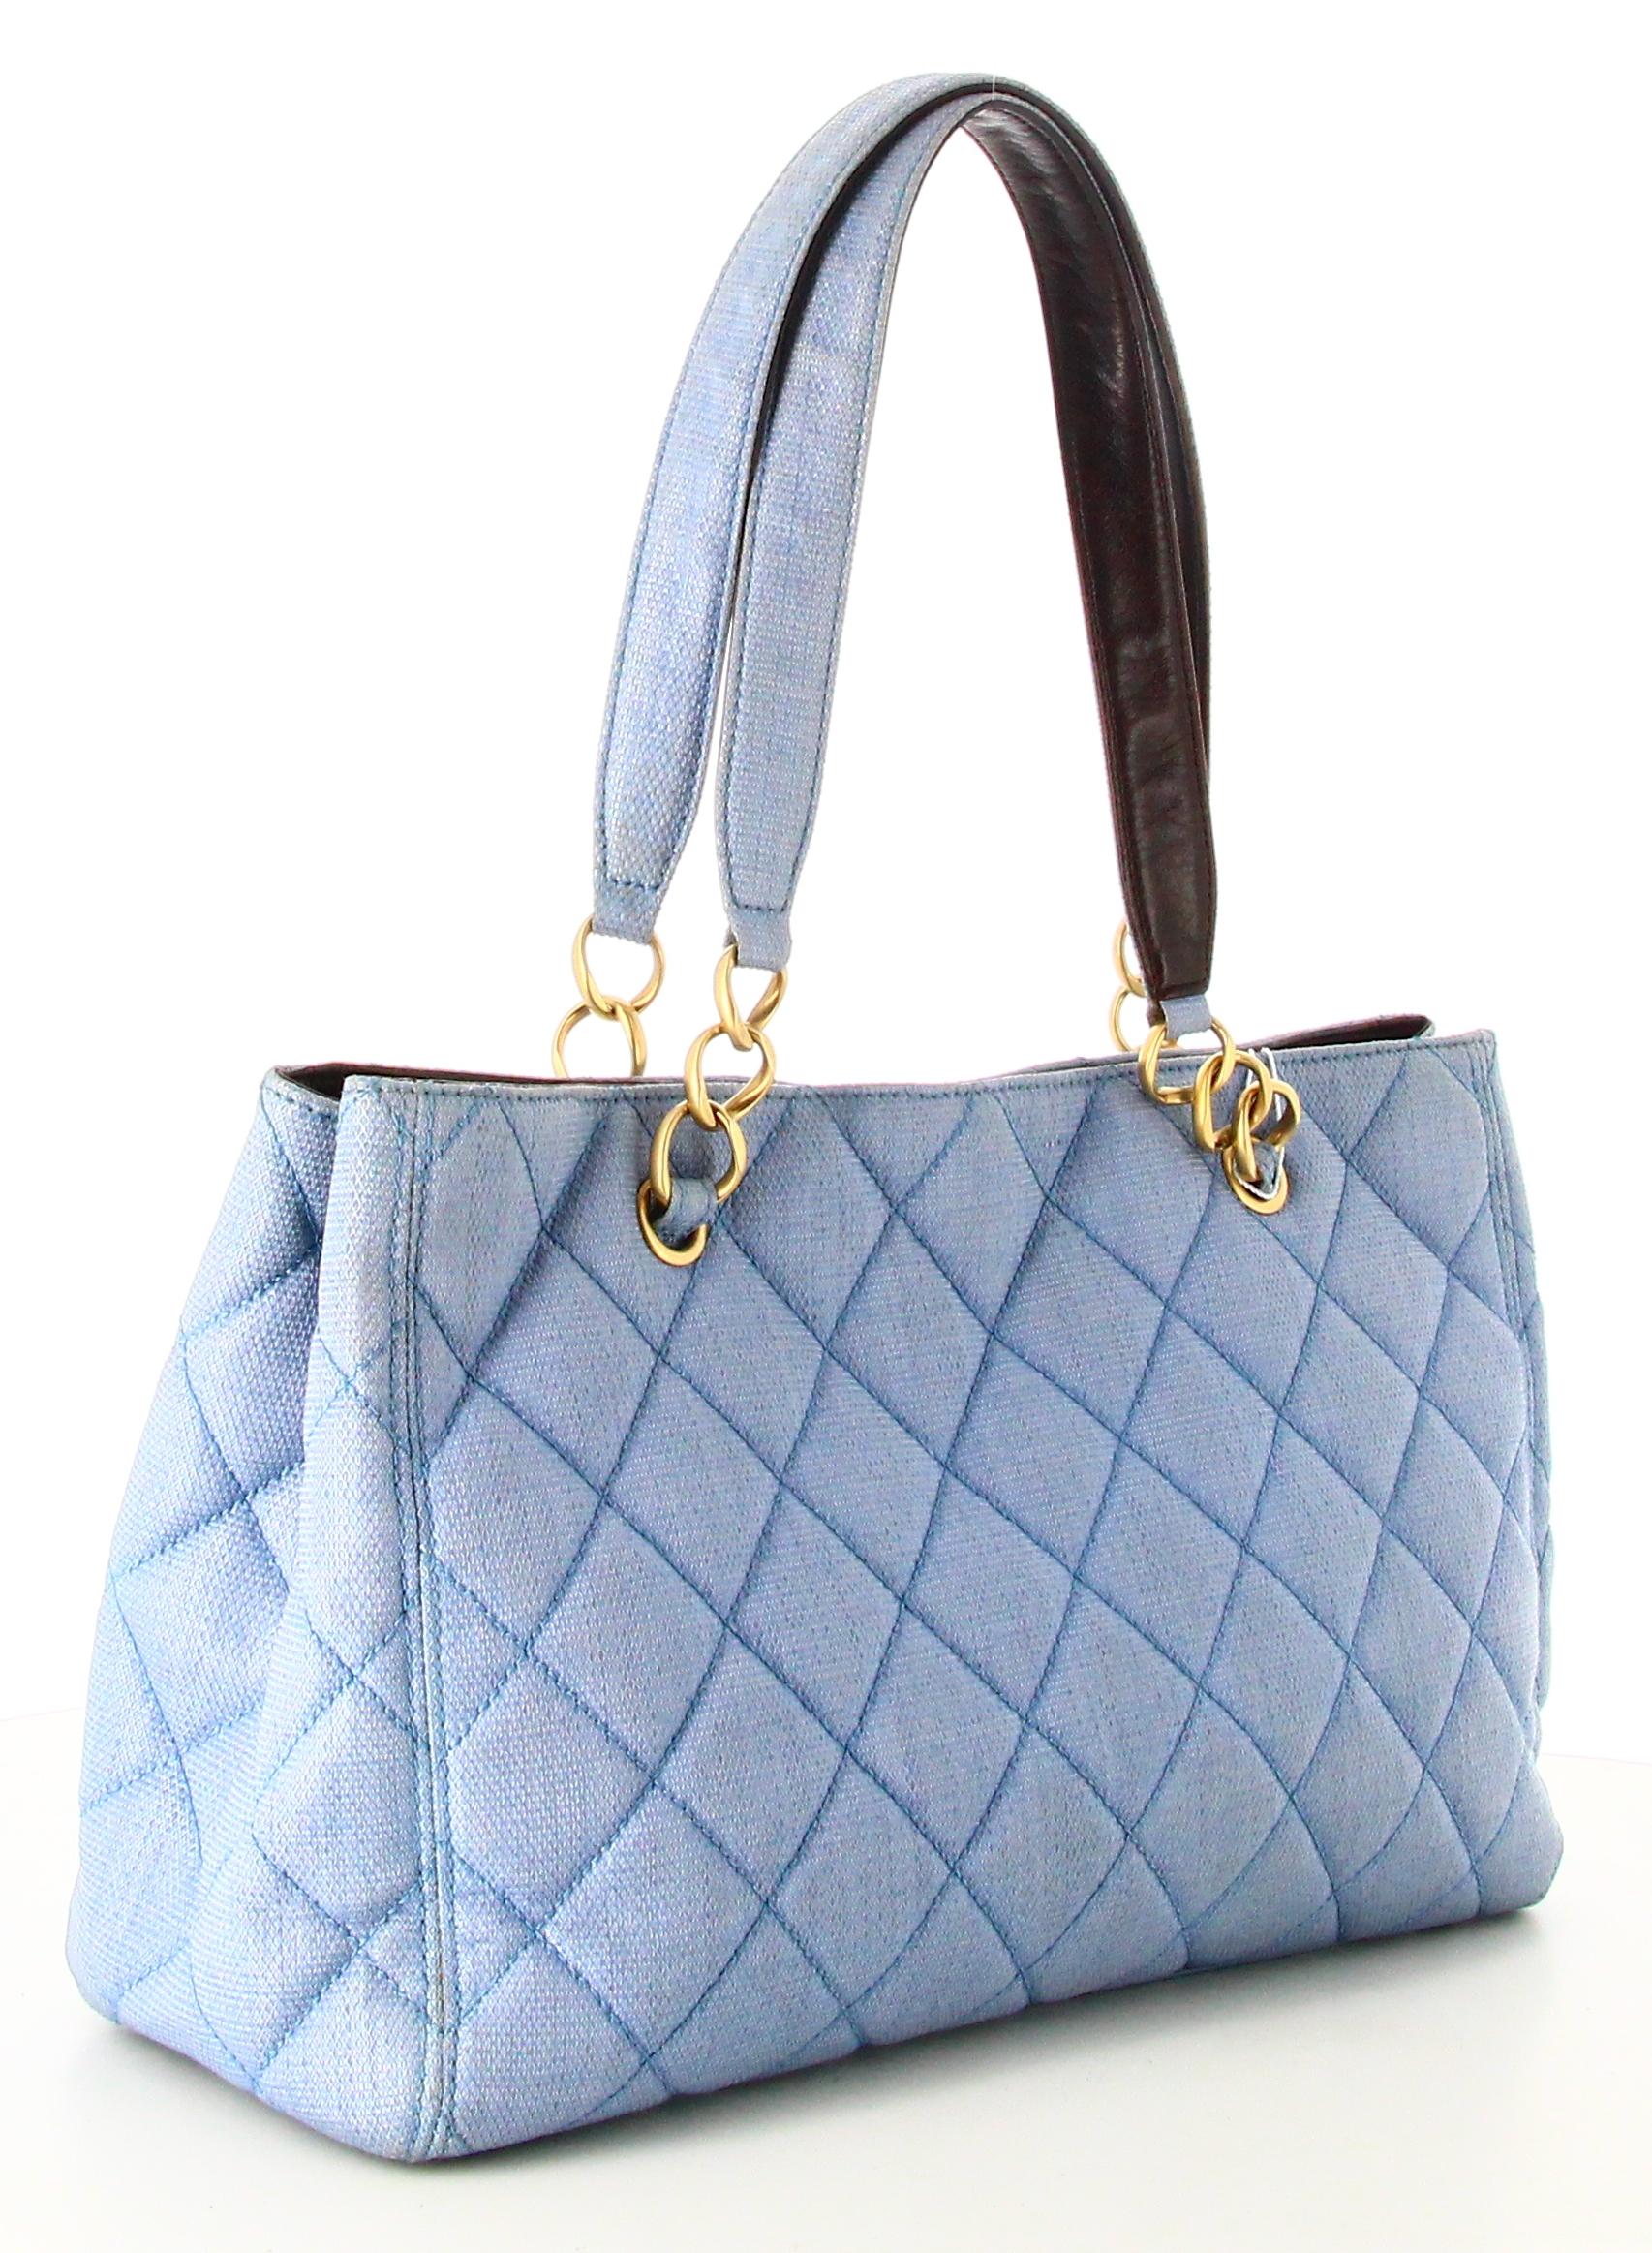 2003 Chanel Quilted Handbag Sky Blue  1